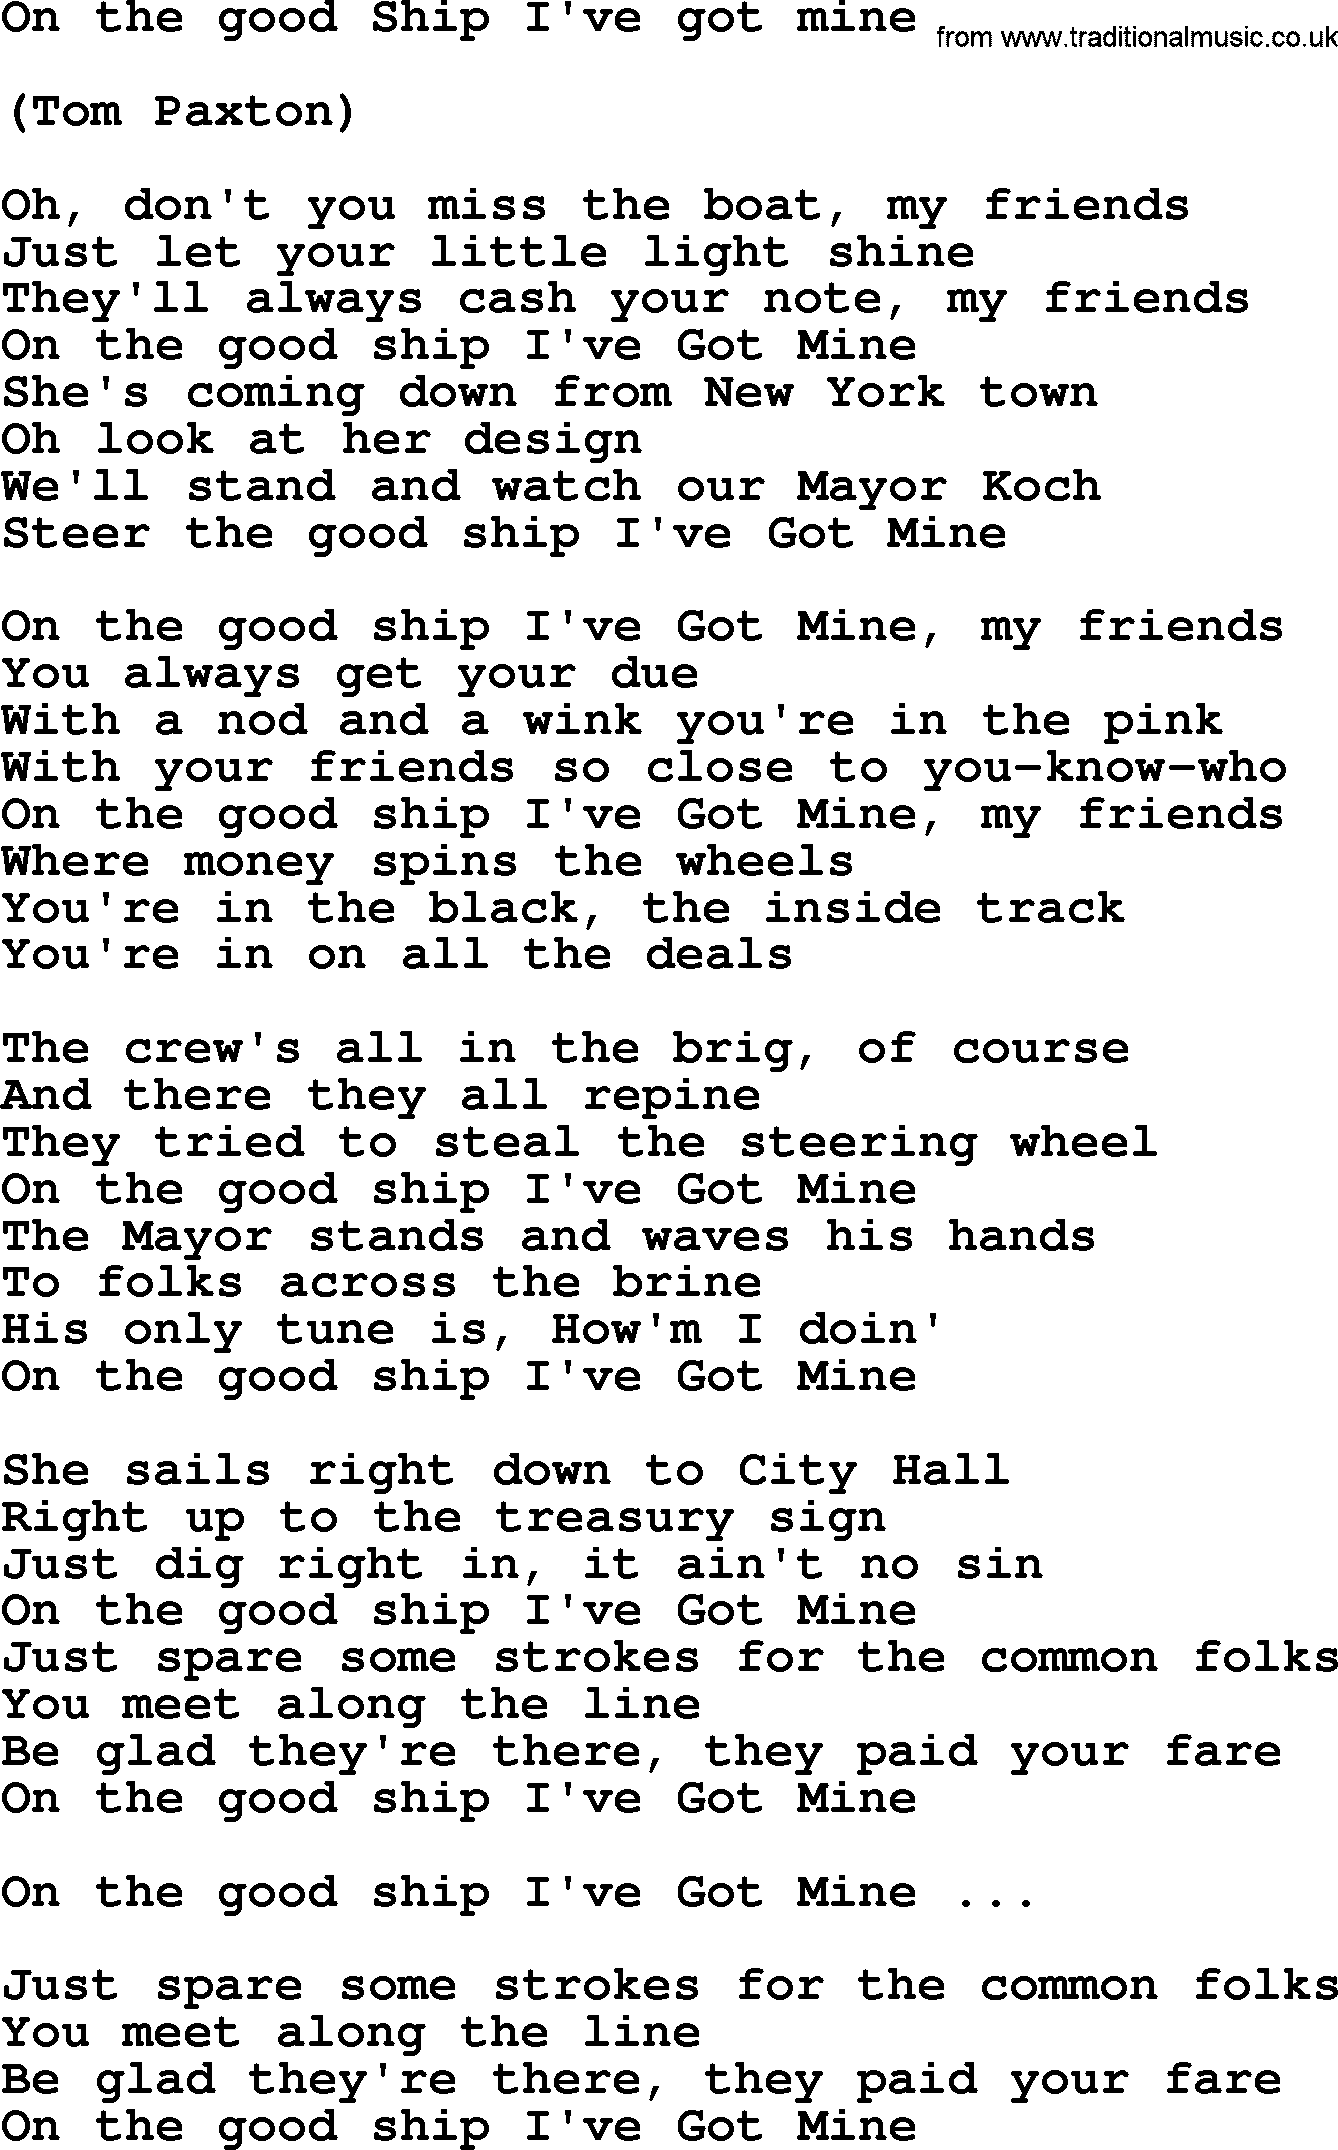 Tom Paxton song: On The Good Ship I've Got Mine, lyrics